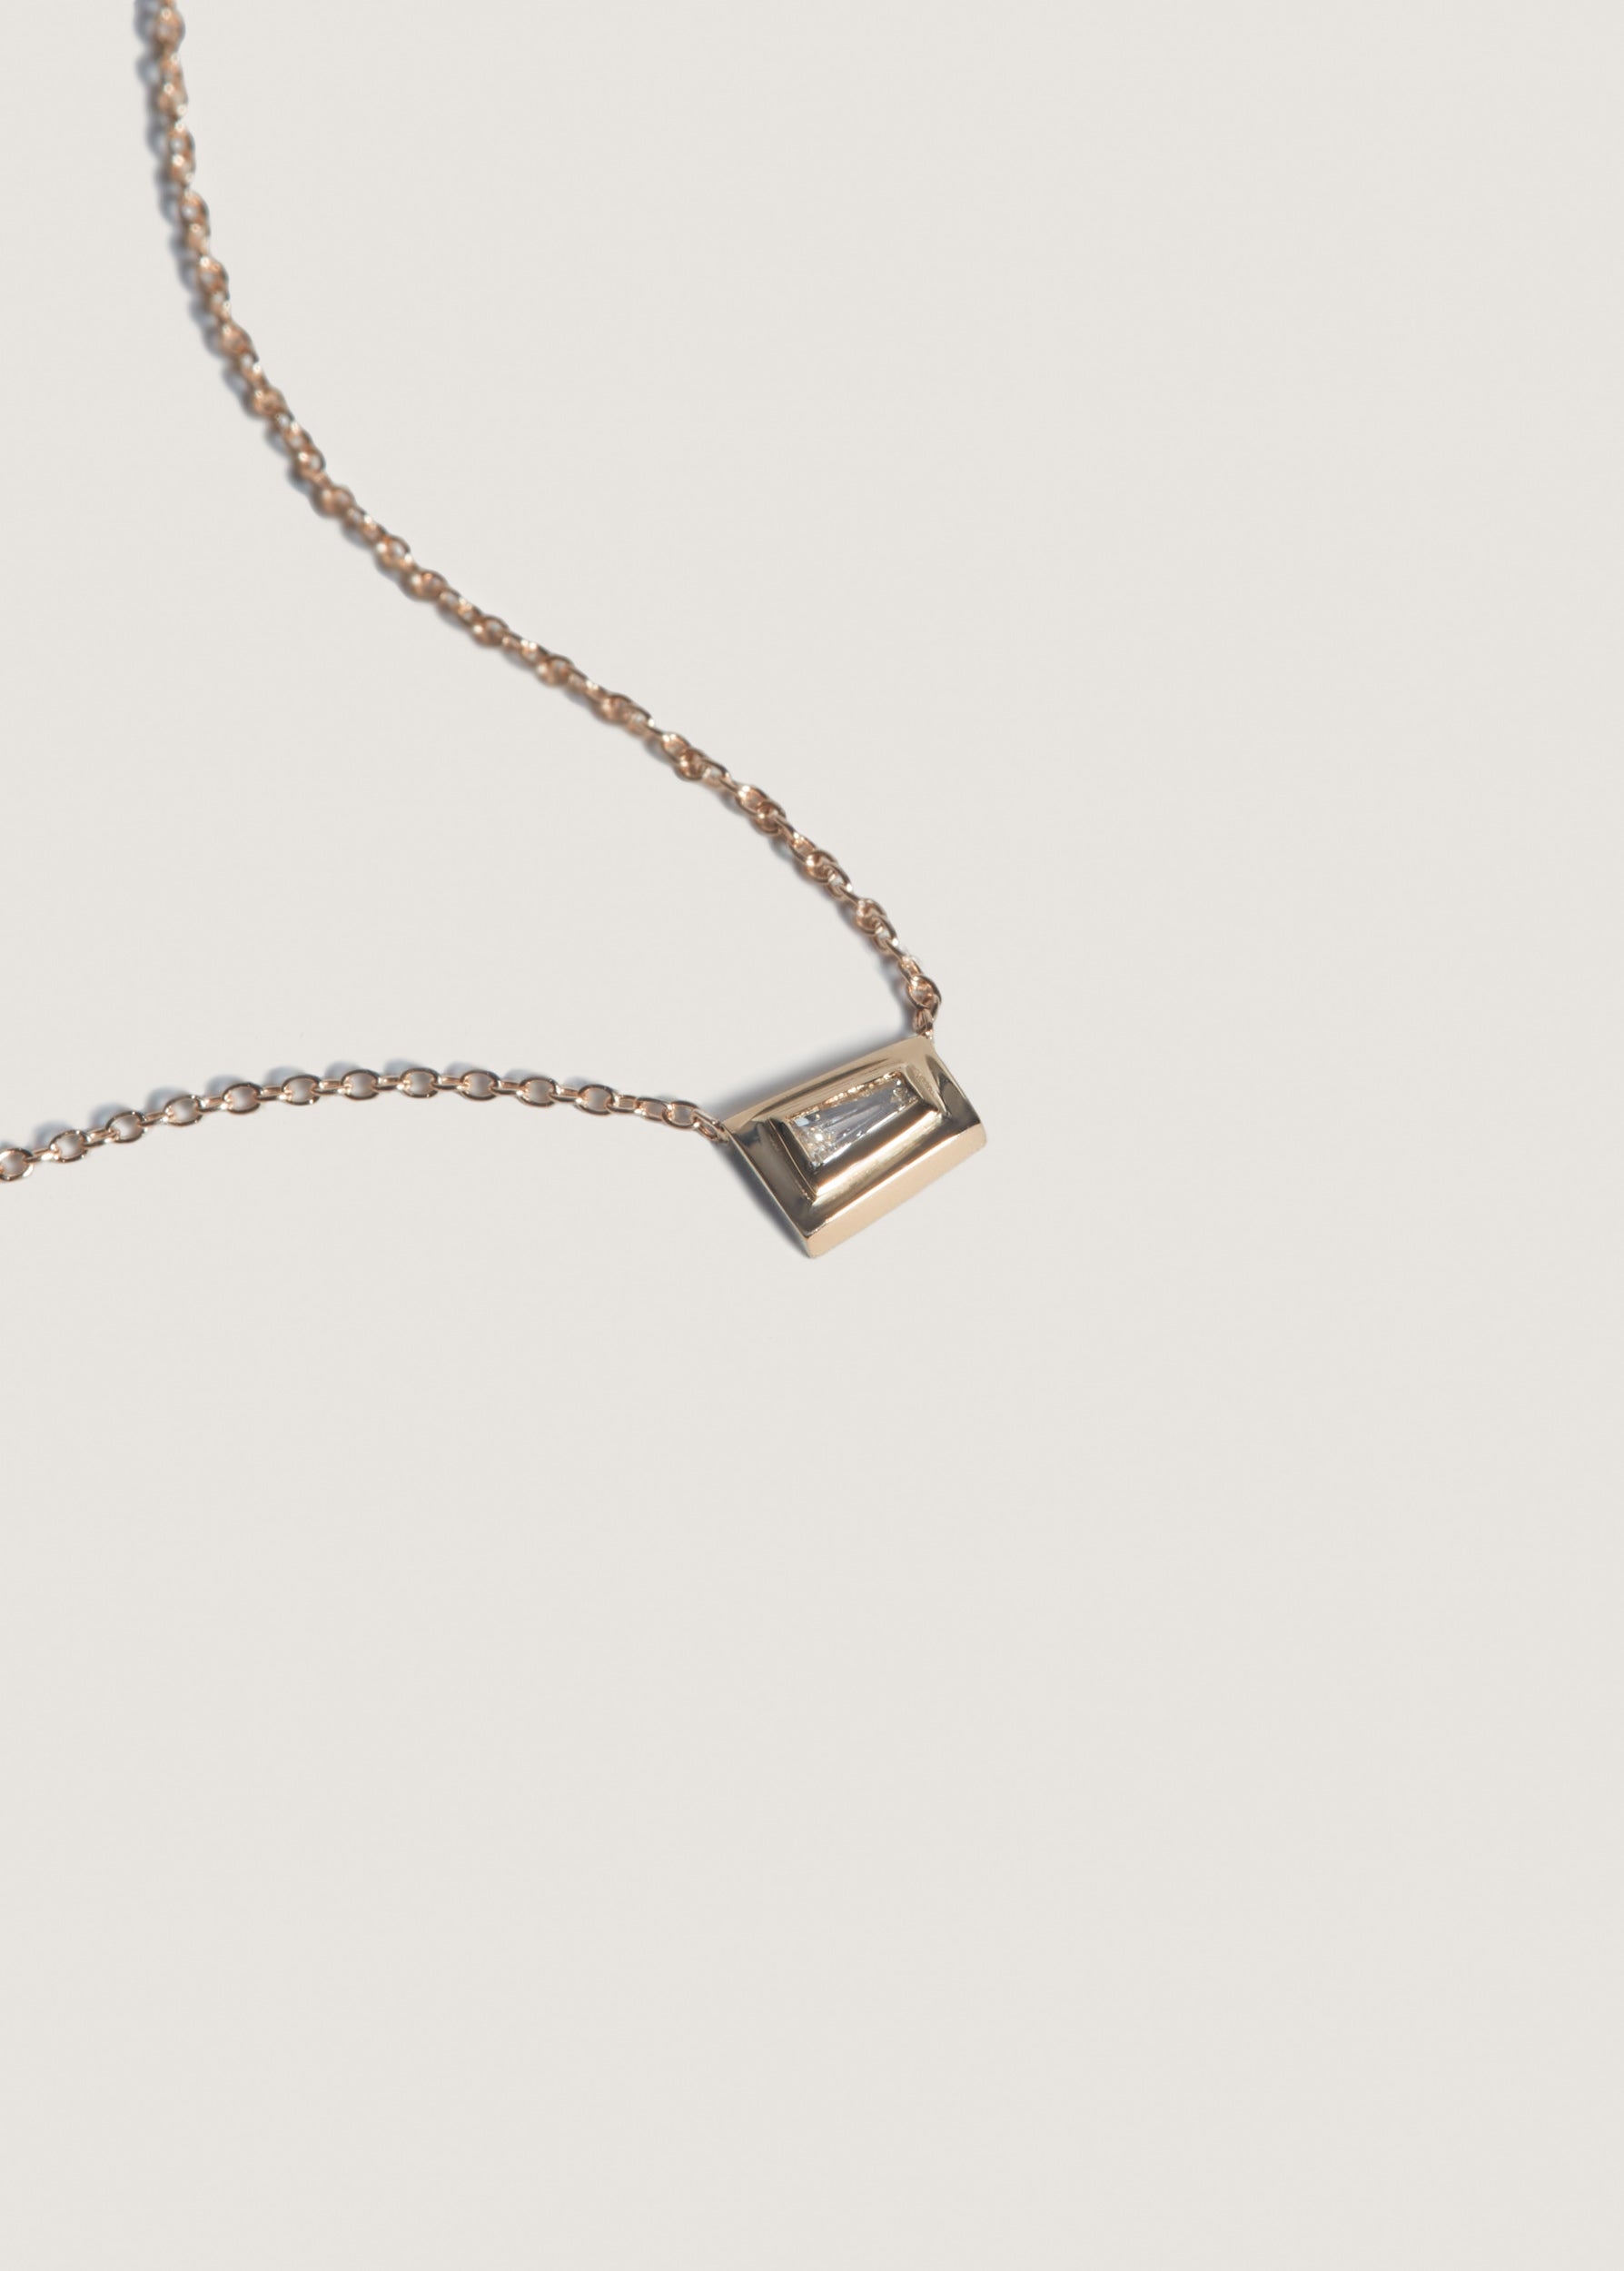 alt="close up of Colette Tapered Necklace"